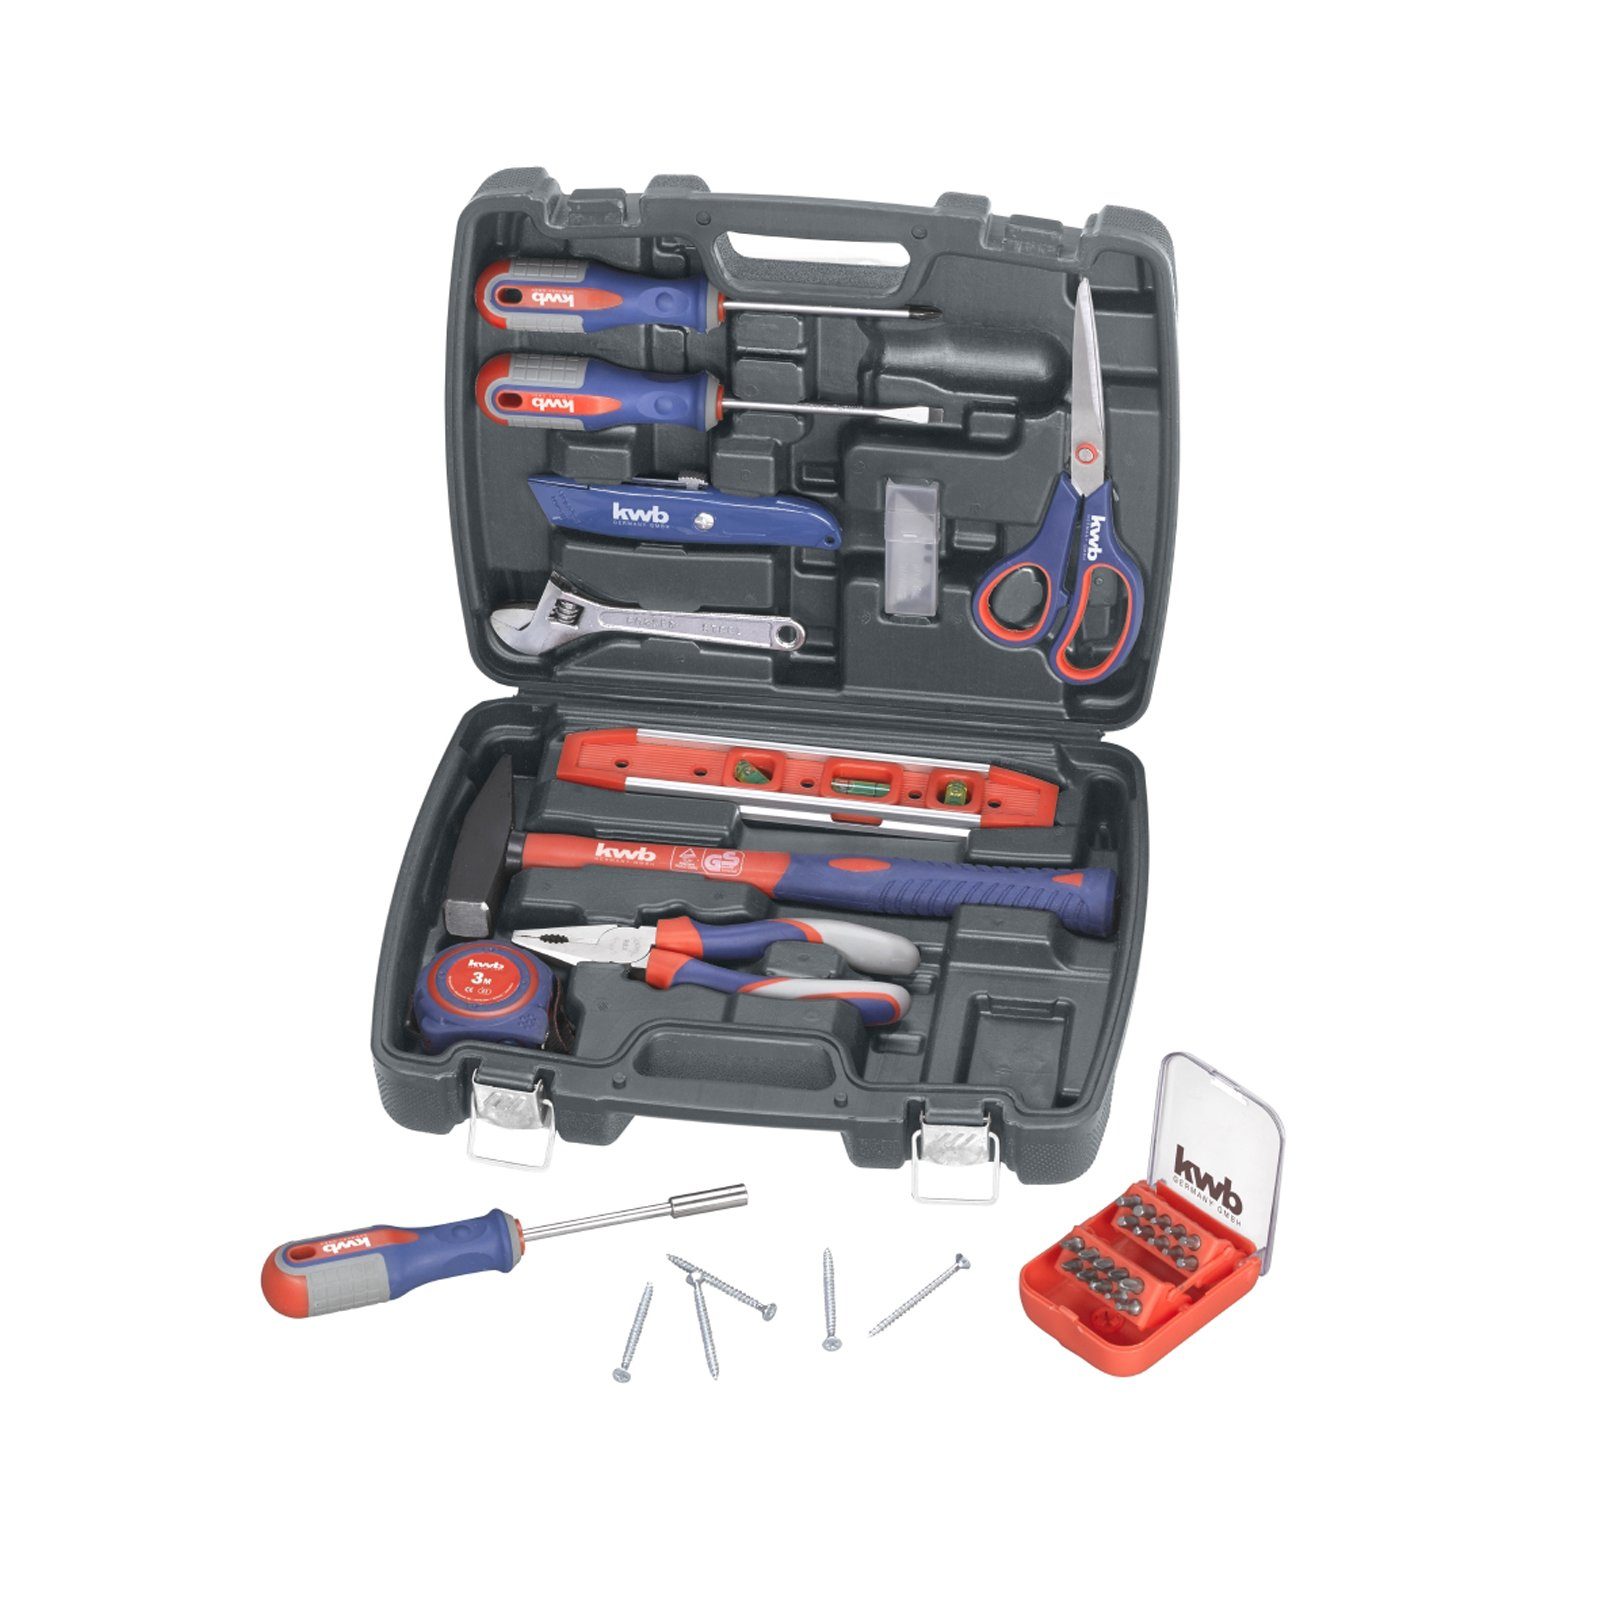 inkl. gefüllt, kwb robust, kwb Werkzeug-Set, Werkzeug-Koffer (Set) 40-teilig, Werkzeugset